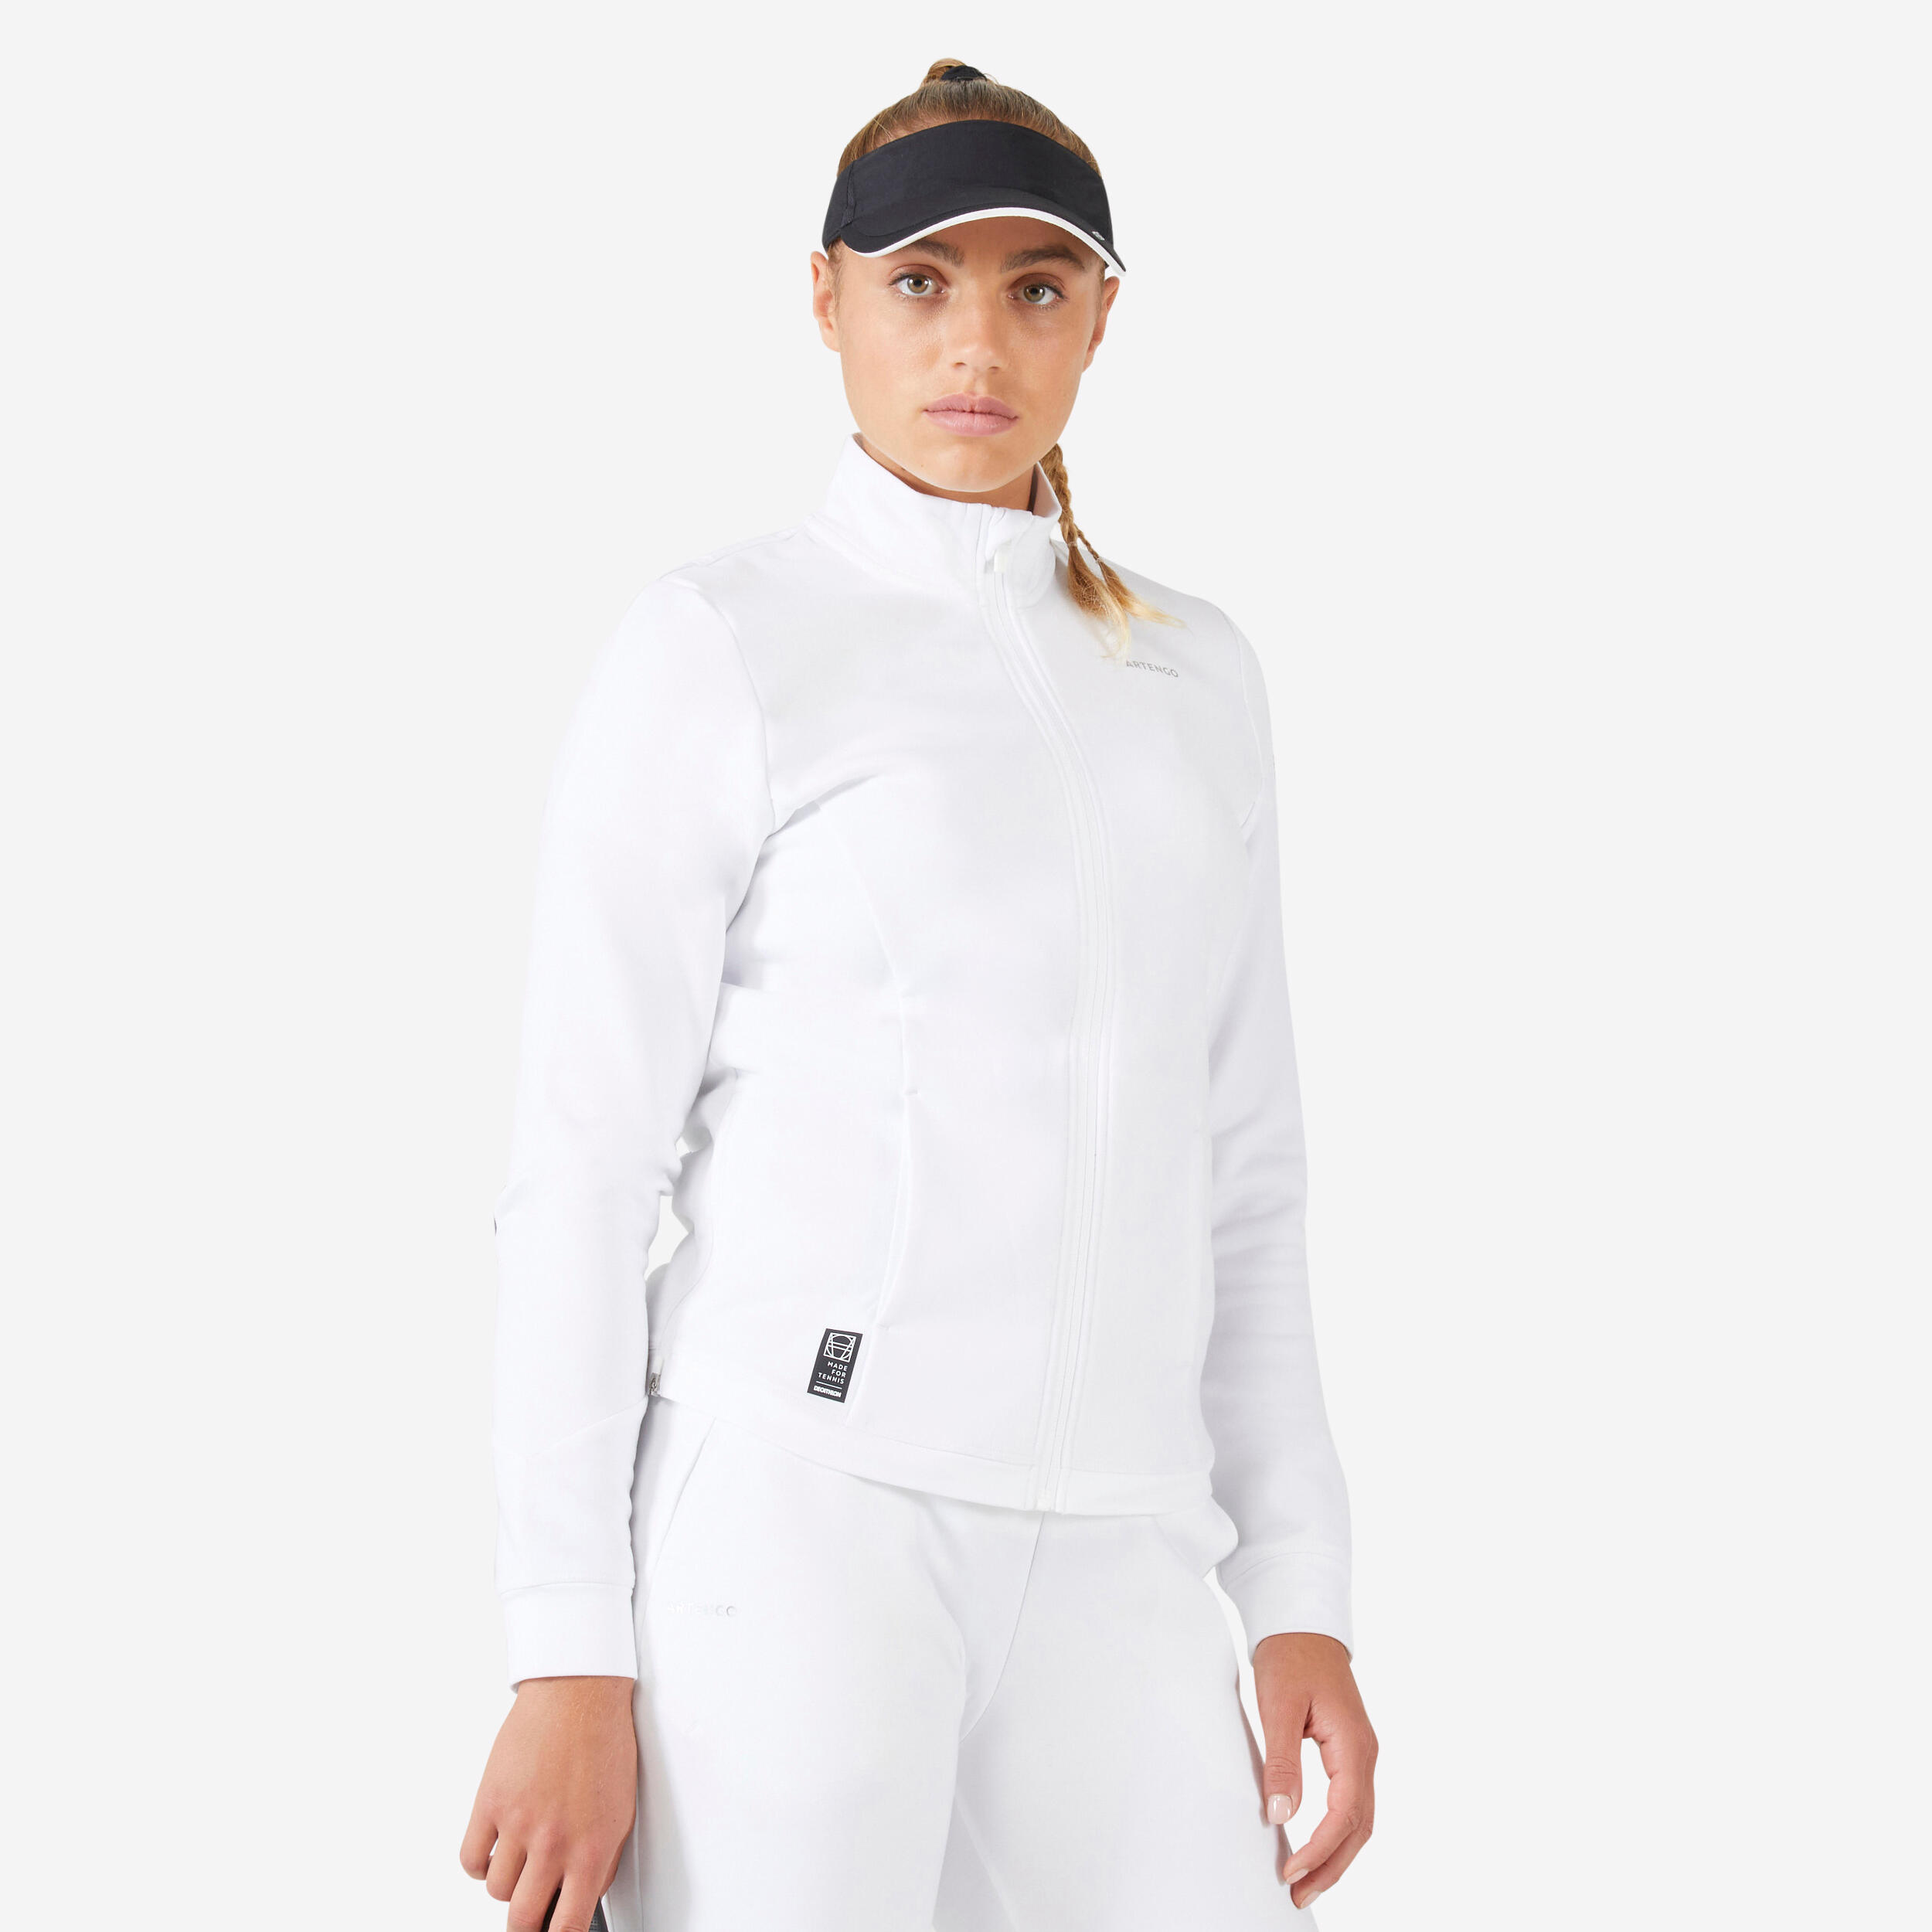 Women's Tennis Quick-Dry Soft Jacket Dry 900 - White 1/5